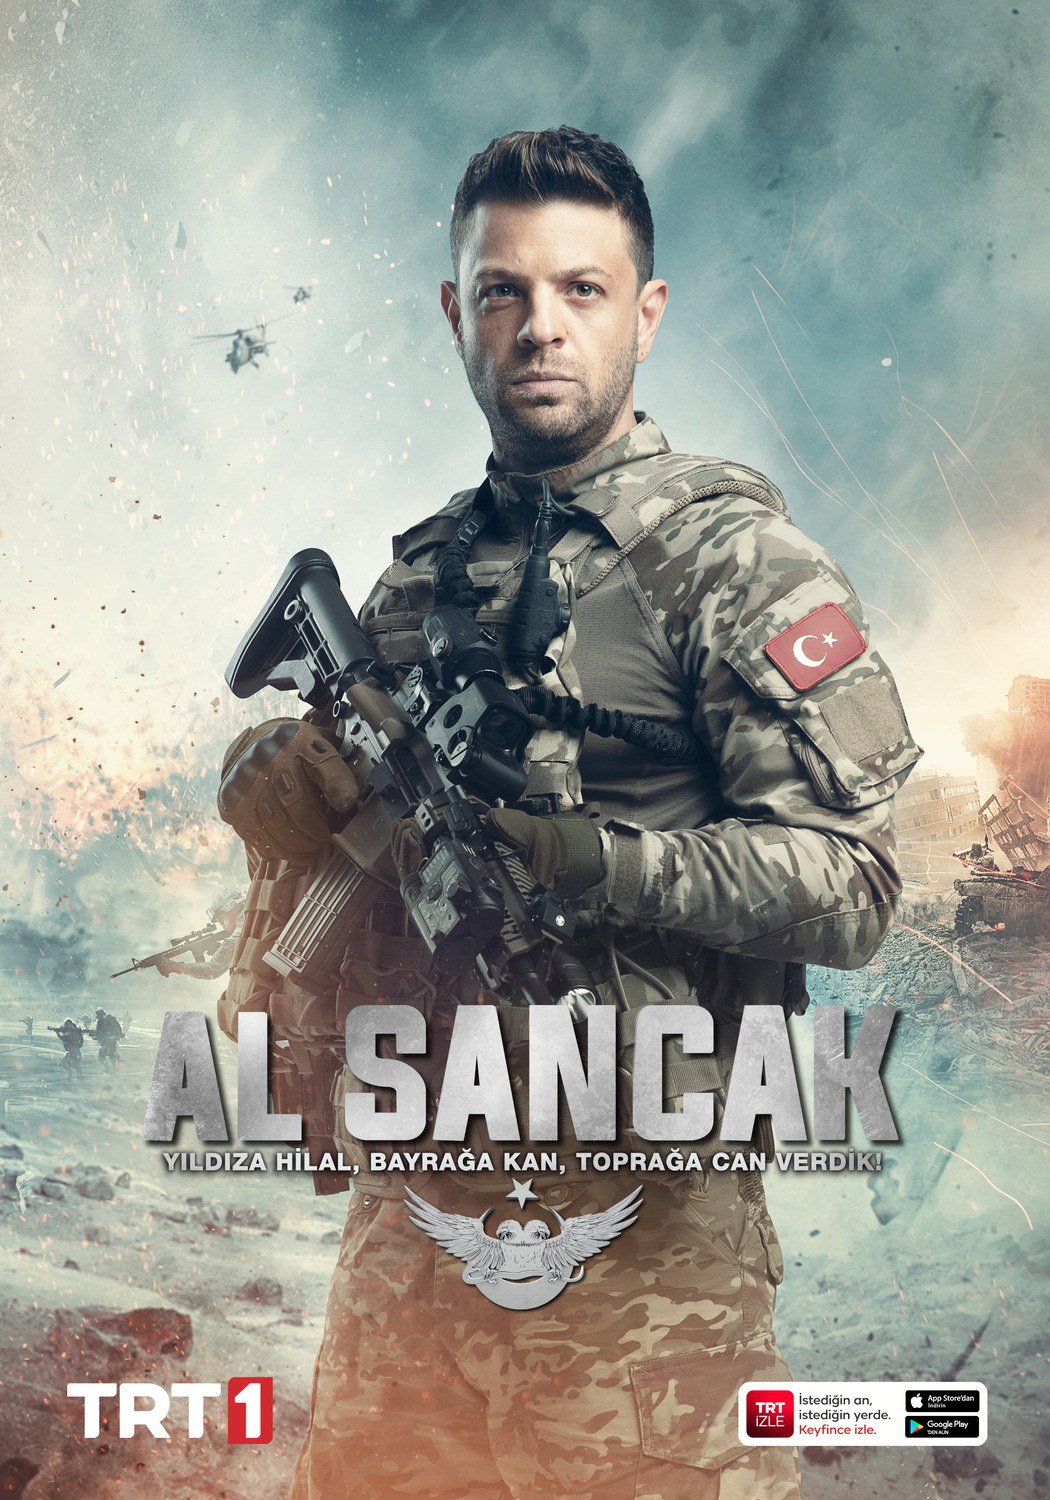 Extra Large TV Poster Image for Al Sancak (#12 of 20)